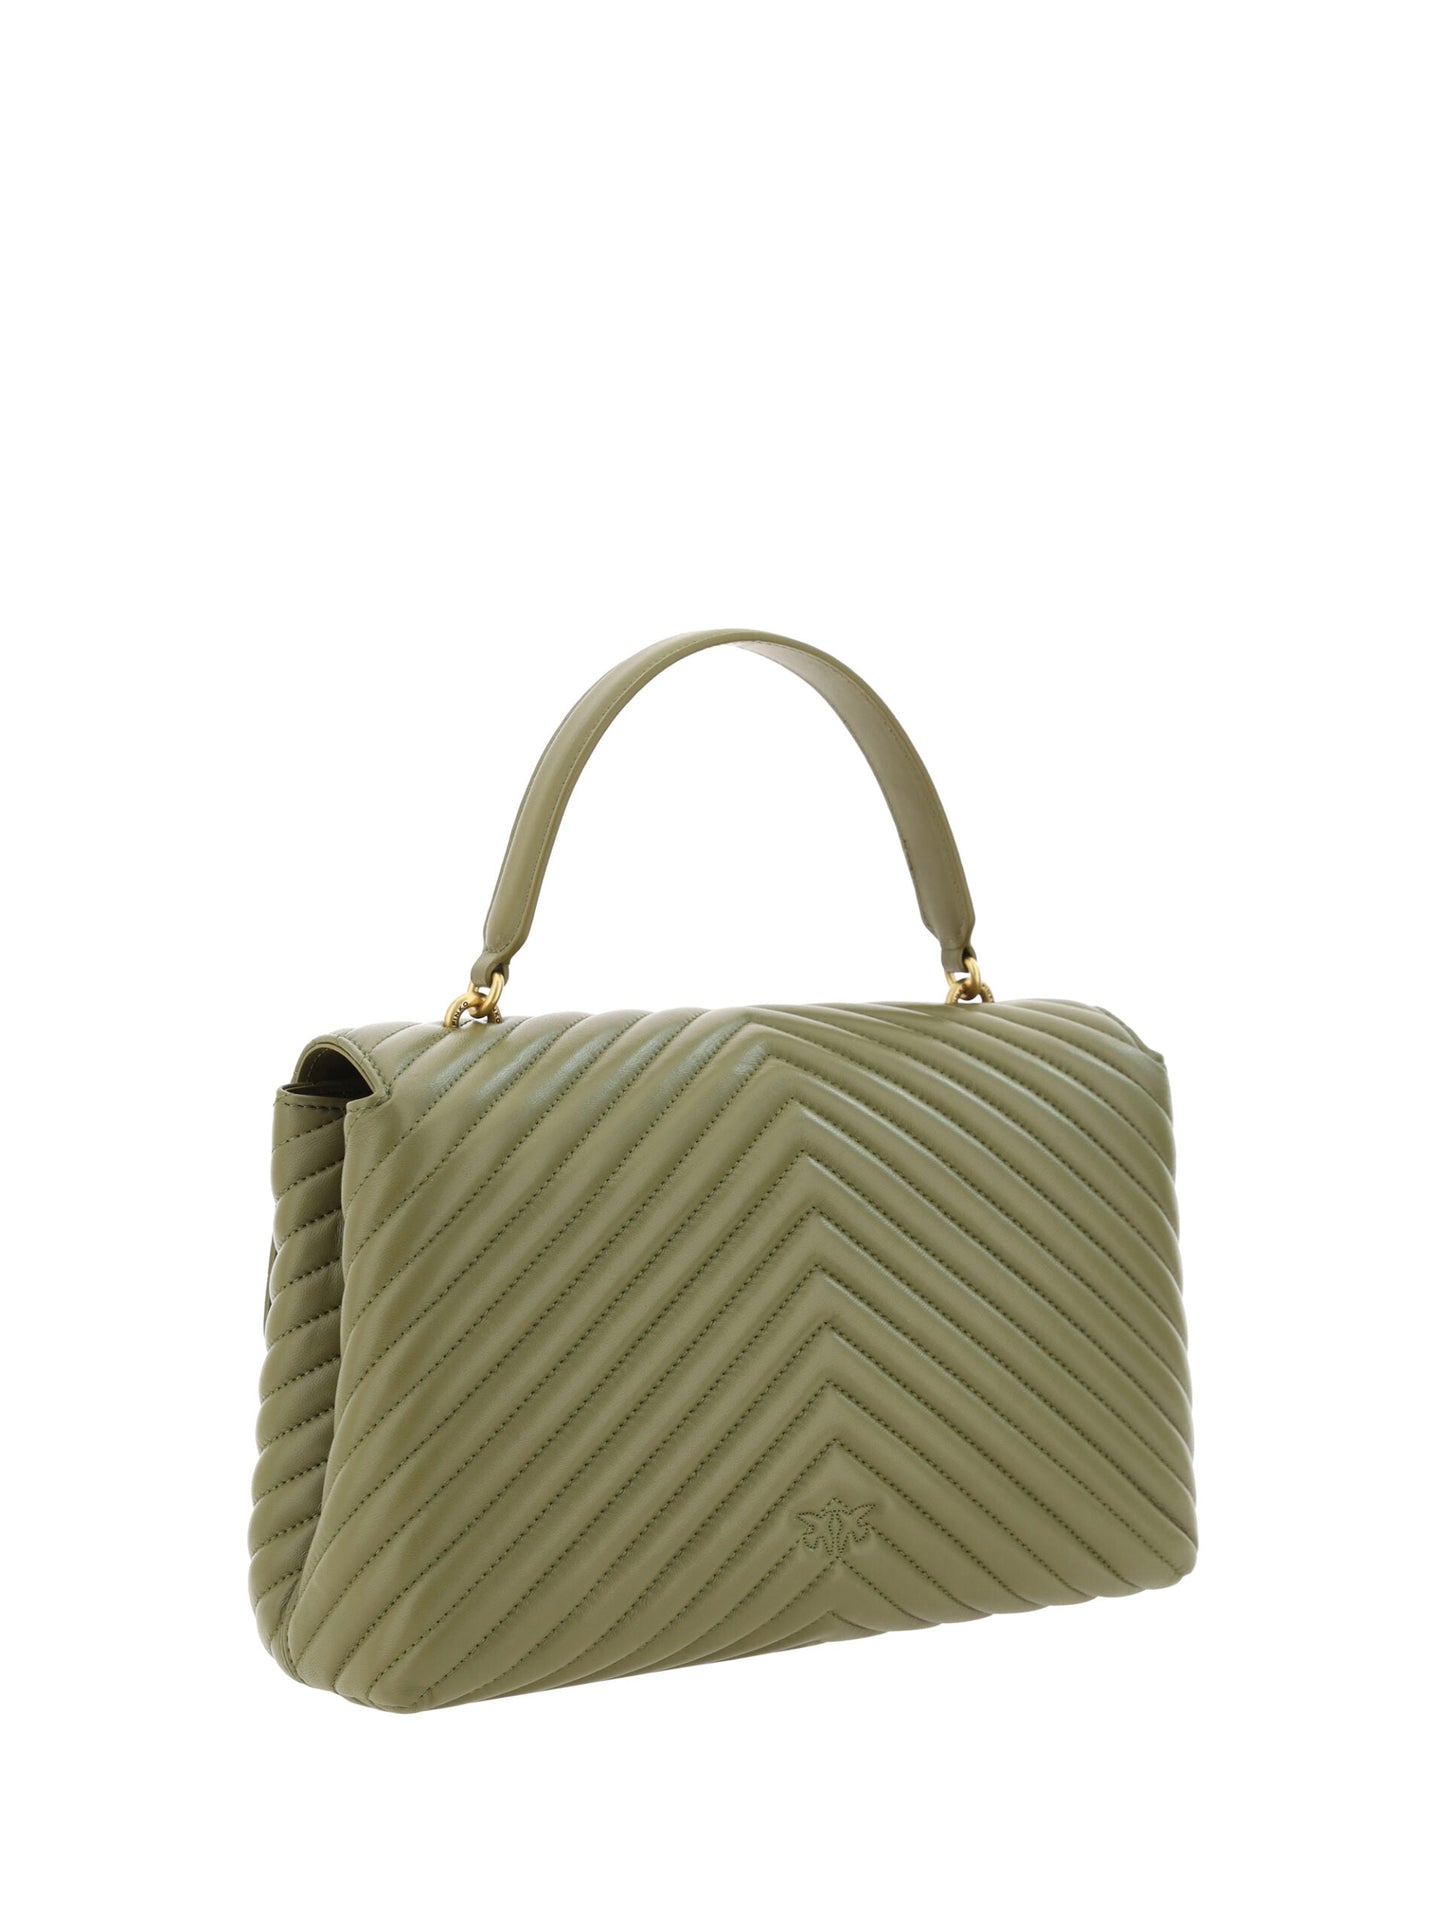 Fashionsarah.com Fashionsarah.com PINKO Green Calf Leather Love Lady Handbag